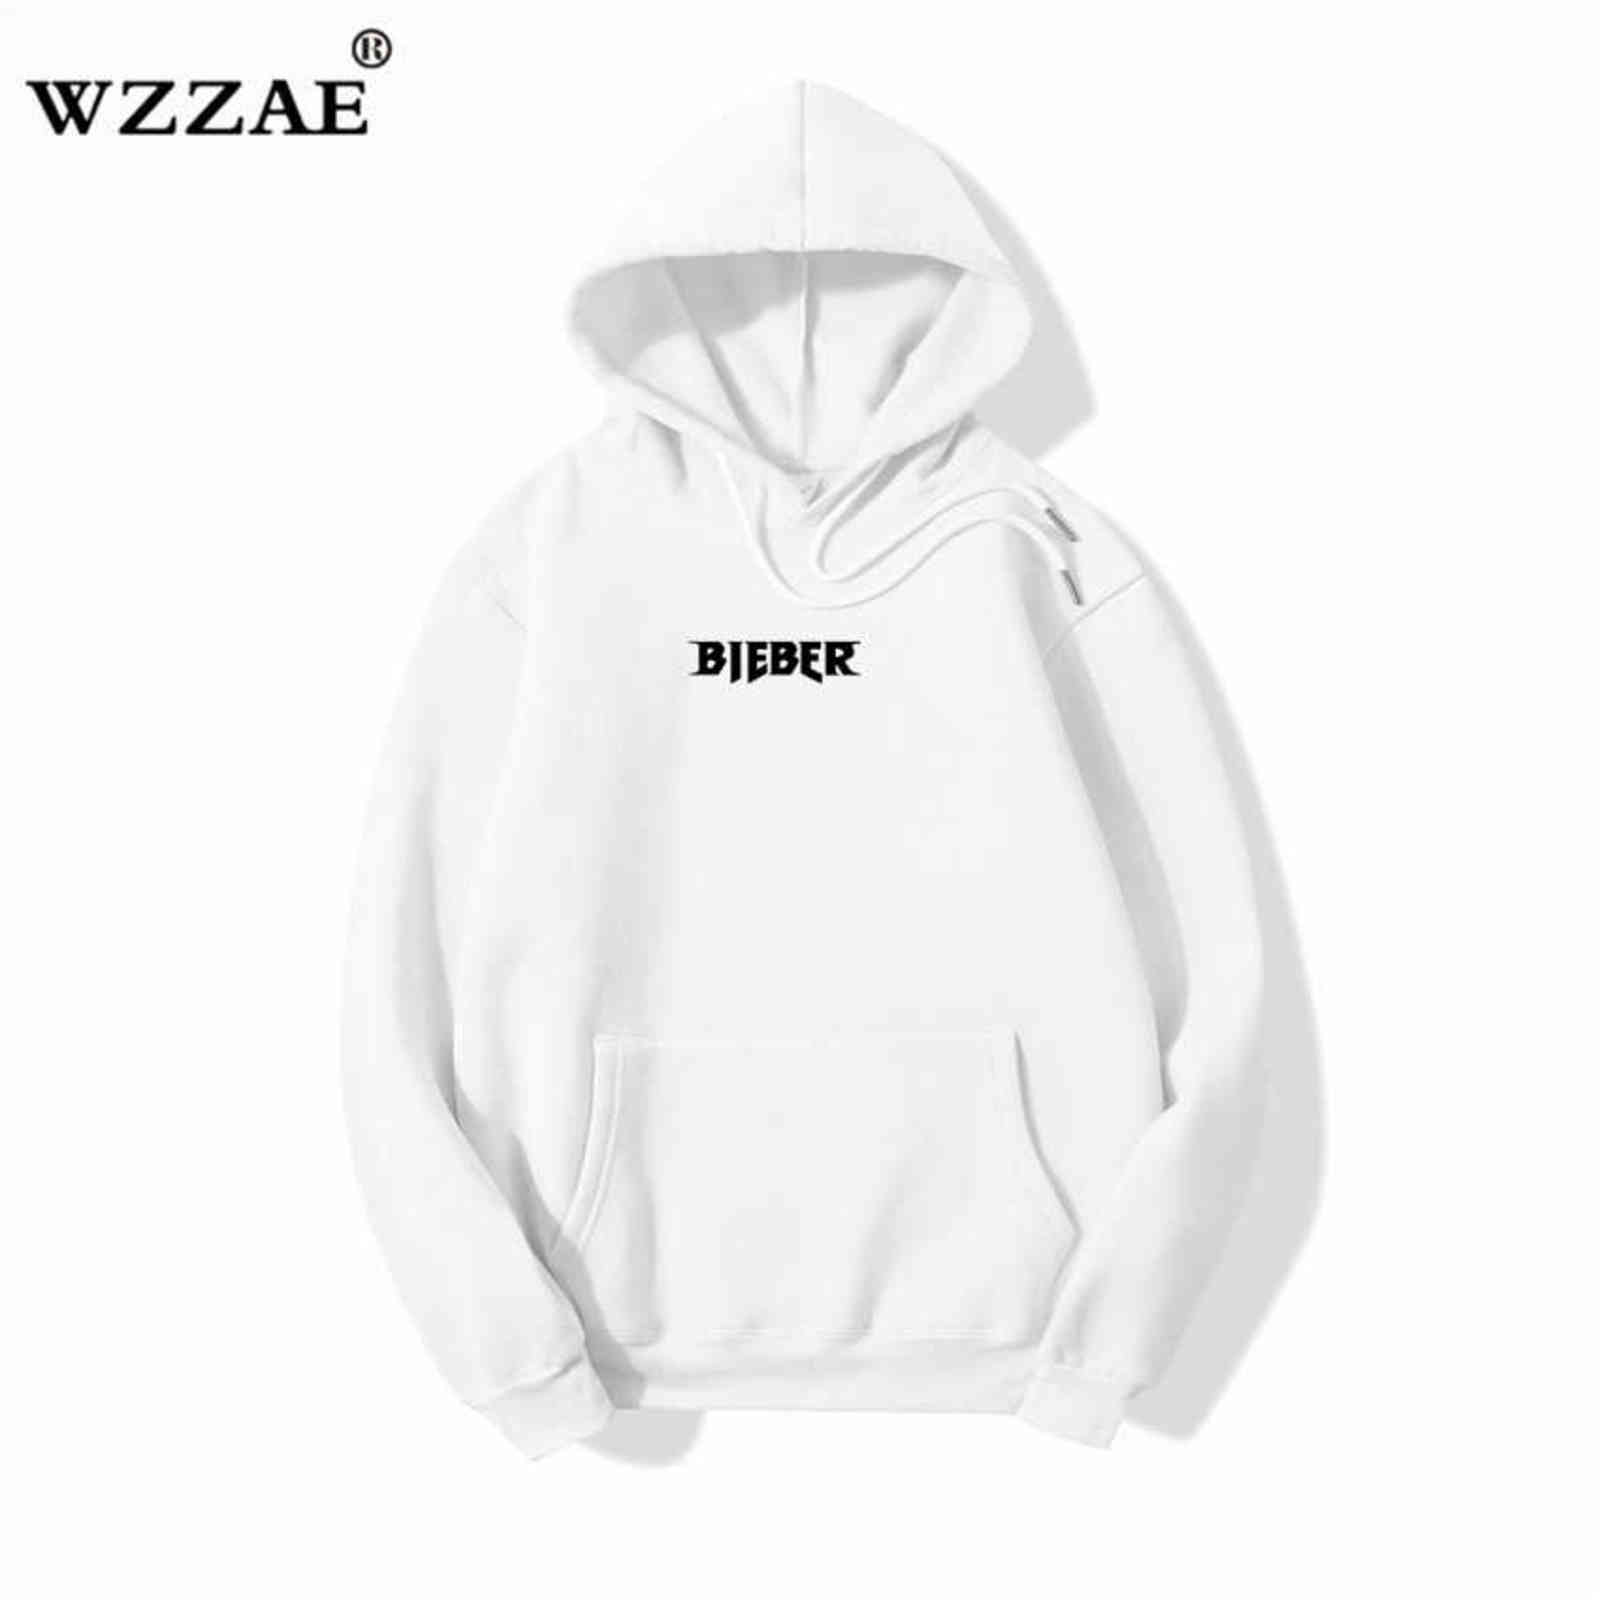 

WZZAE High Quality Clothing 2020 Hip Hop Streetwear Man Hoody Men' Hoodie Justin Bieber Purpose Tour hoodies Khaki Size -XXL H1105, White 2